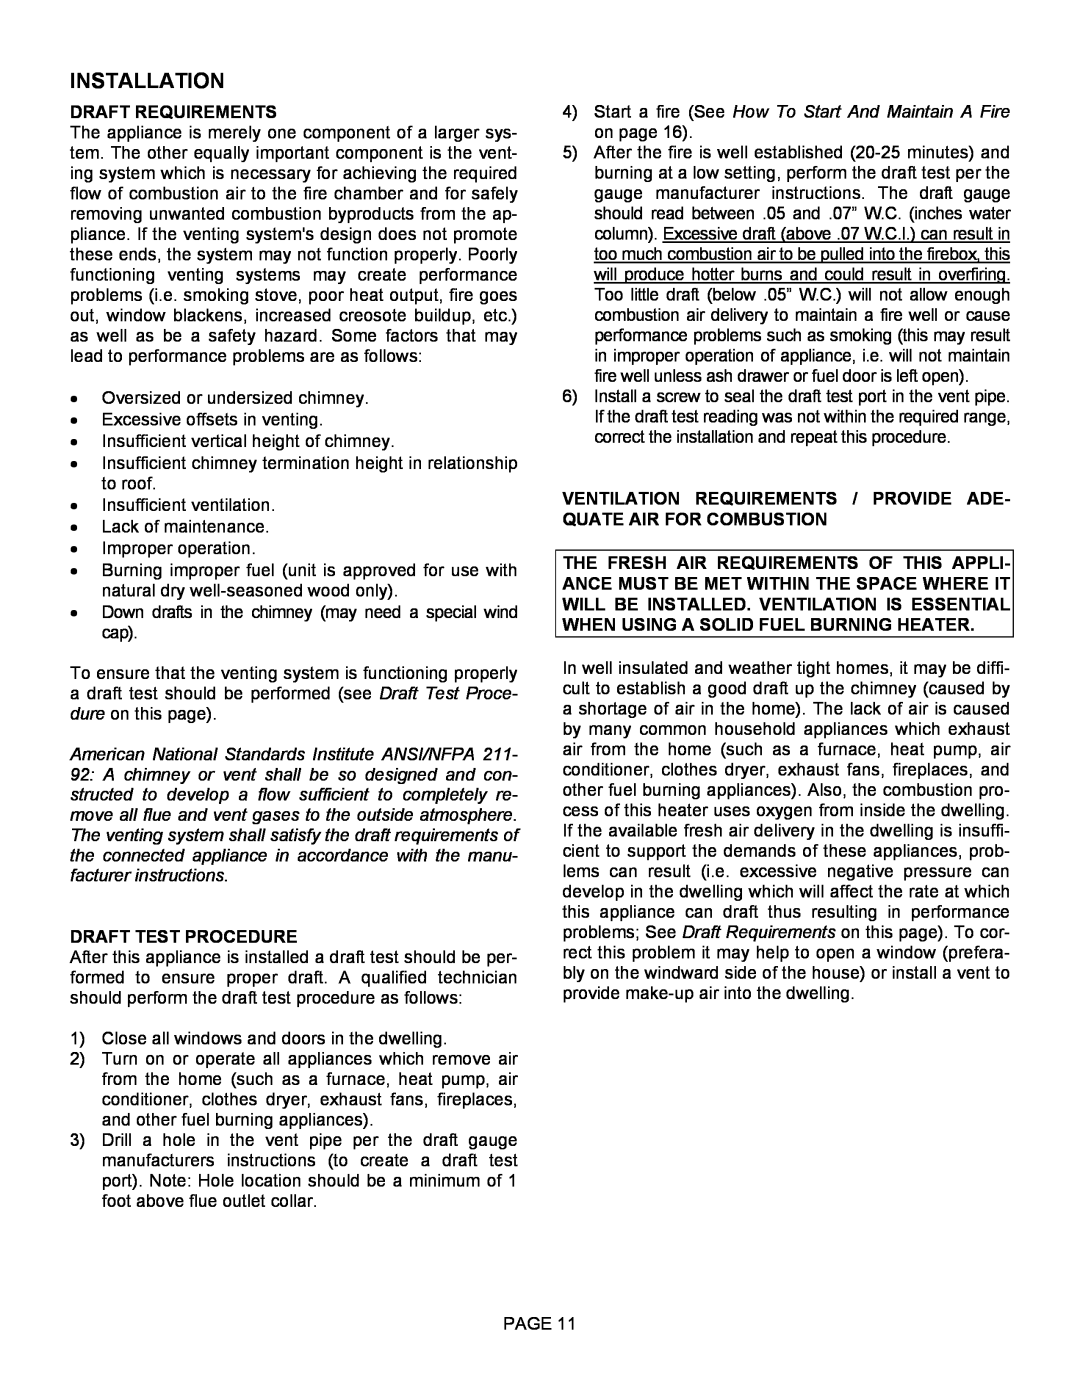 Lennox Hearth 1003C operation manual Draft Requirements, Draft Test Procedure, Installation 